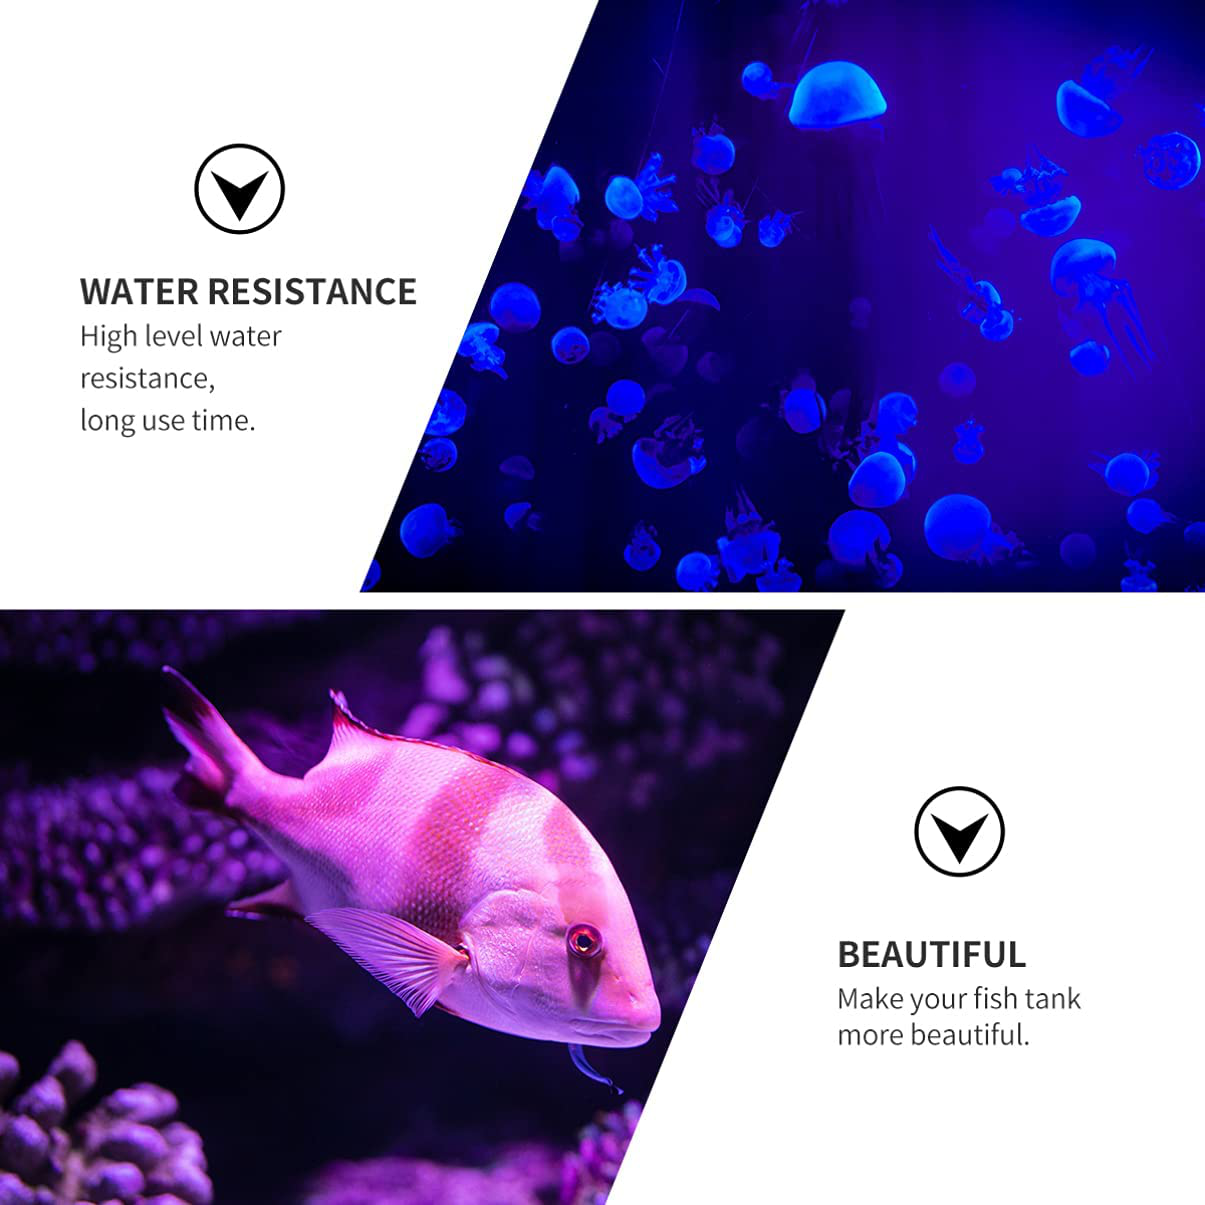 Uonlytech LED Aquarium Light 12W Aquarium Fish Tank Light Fish Tank Bulb for Coral Reef Saltwater Tank Plants Growth